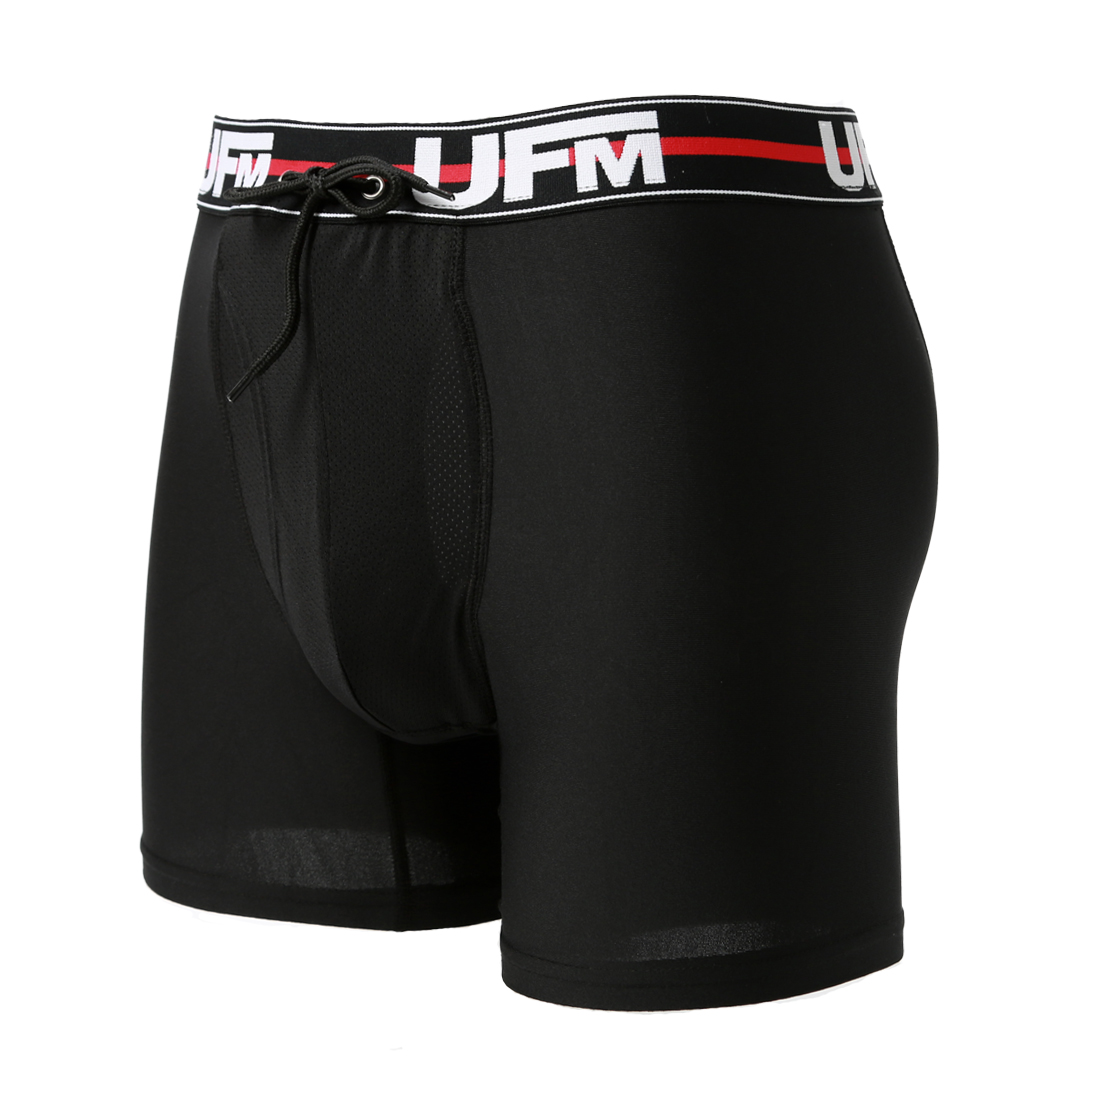 Parent UFM Underwear for Men Medical Polyester 6 inch Original Max Boxer Brief Black 800